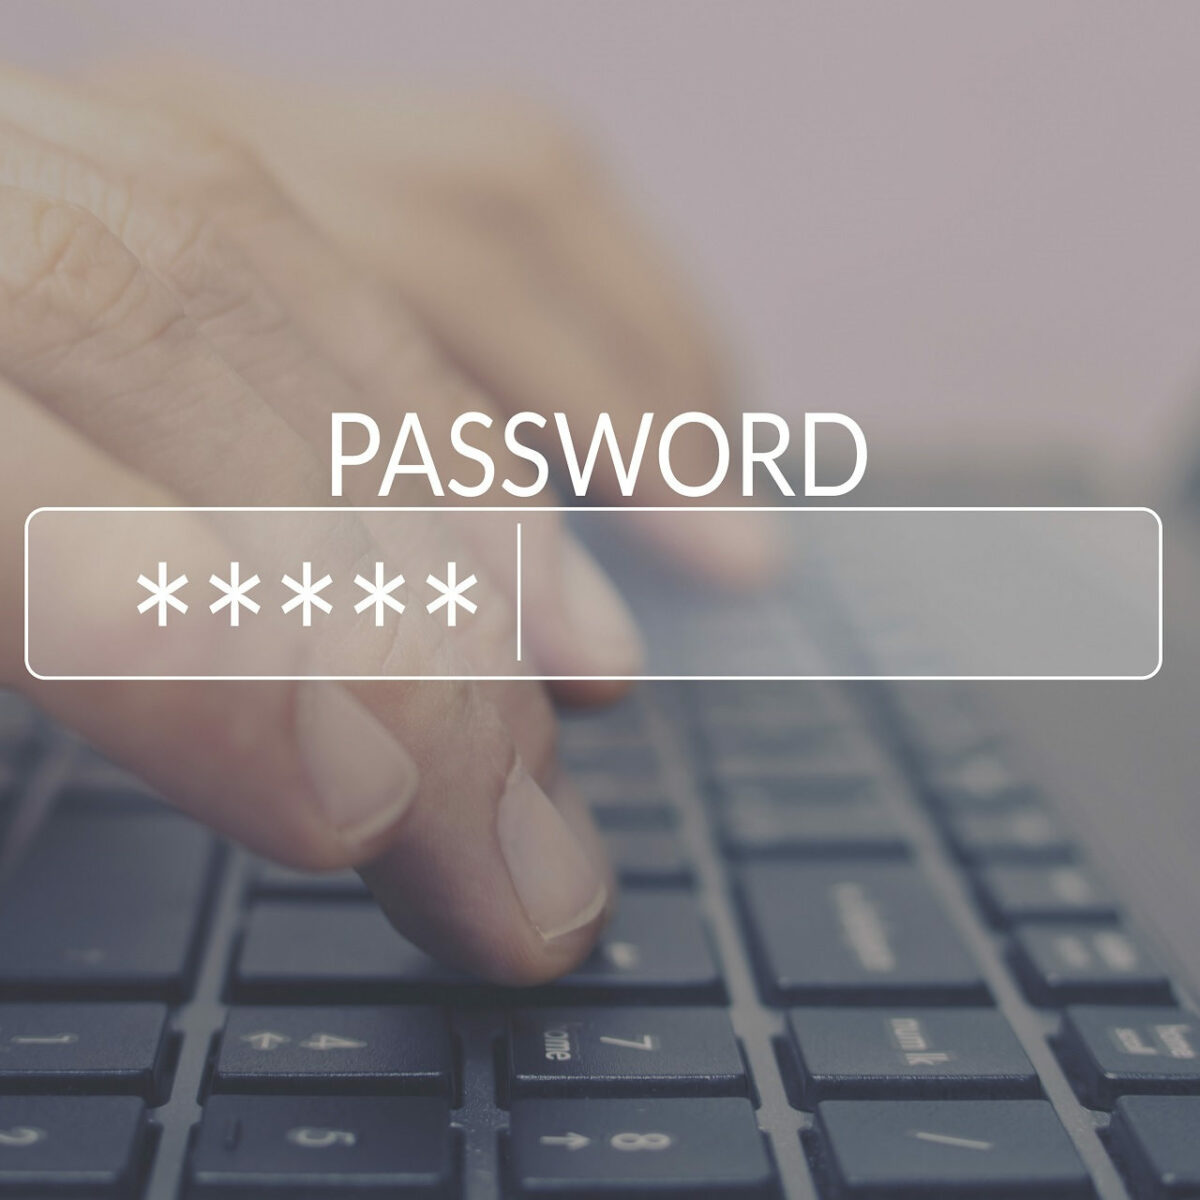 Best Windows 7 Password Recovery Software 2021 Guide - roblox password cracker download 2021